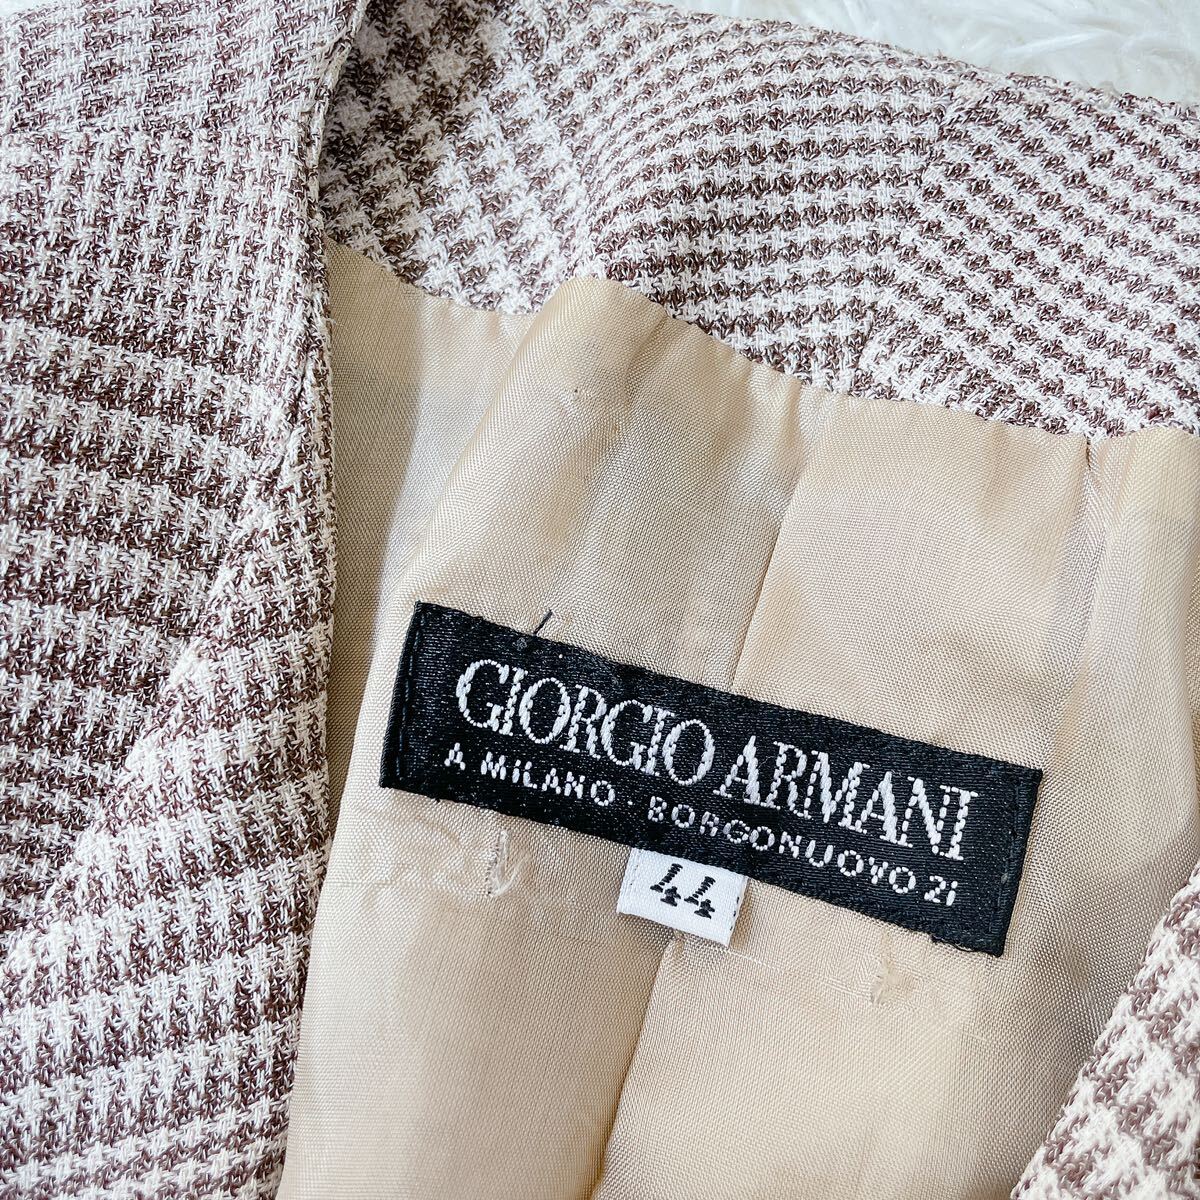  immediate bid joru geo Armani linen. Glenn check pattern tailored jacket 44joru geo Armani Japan made 